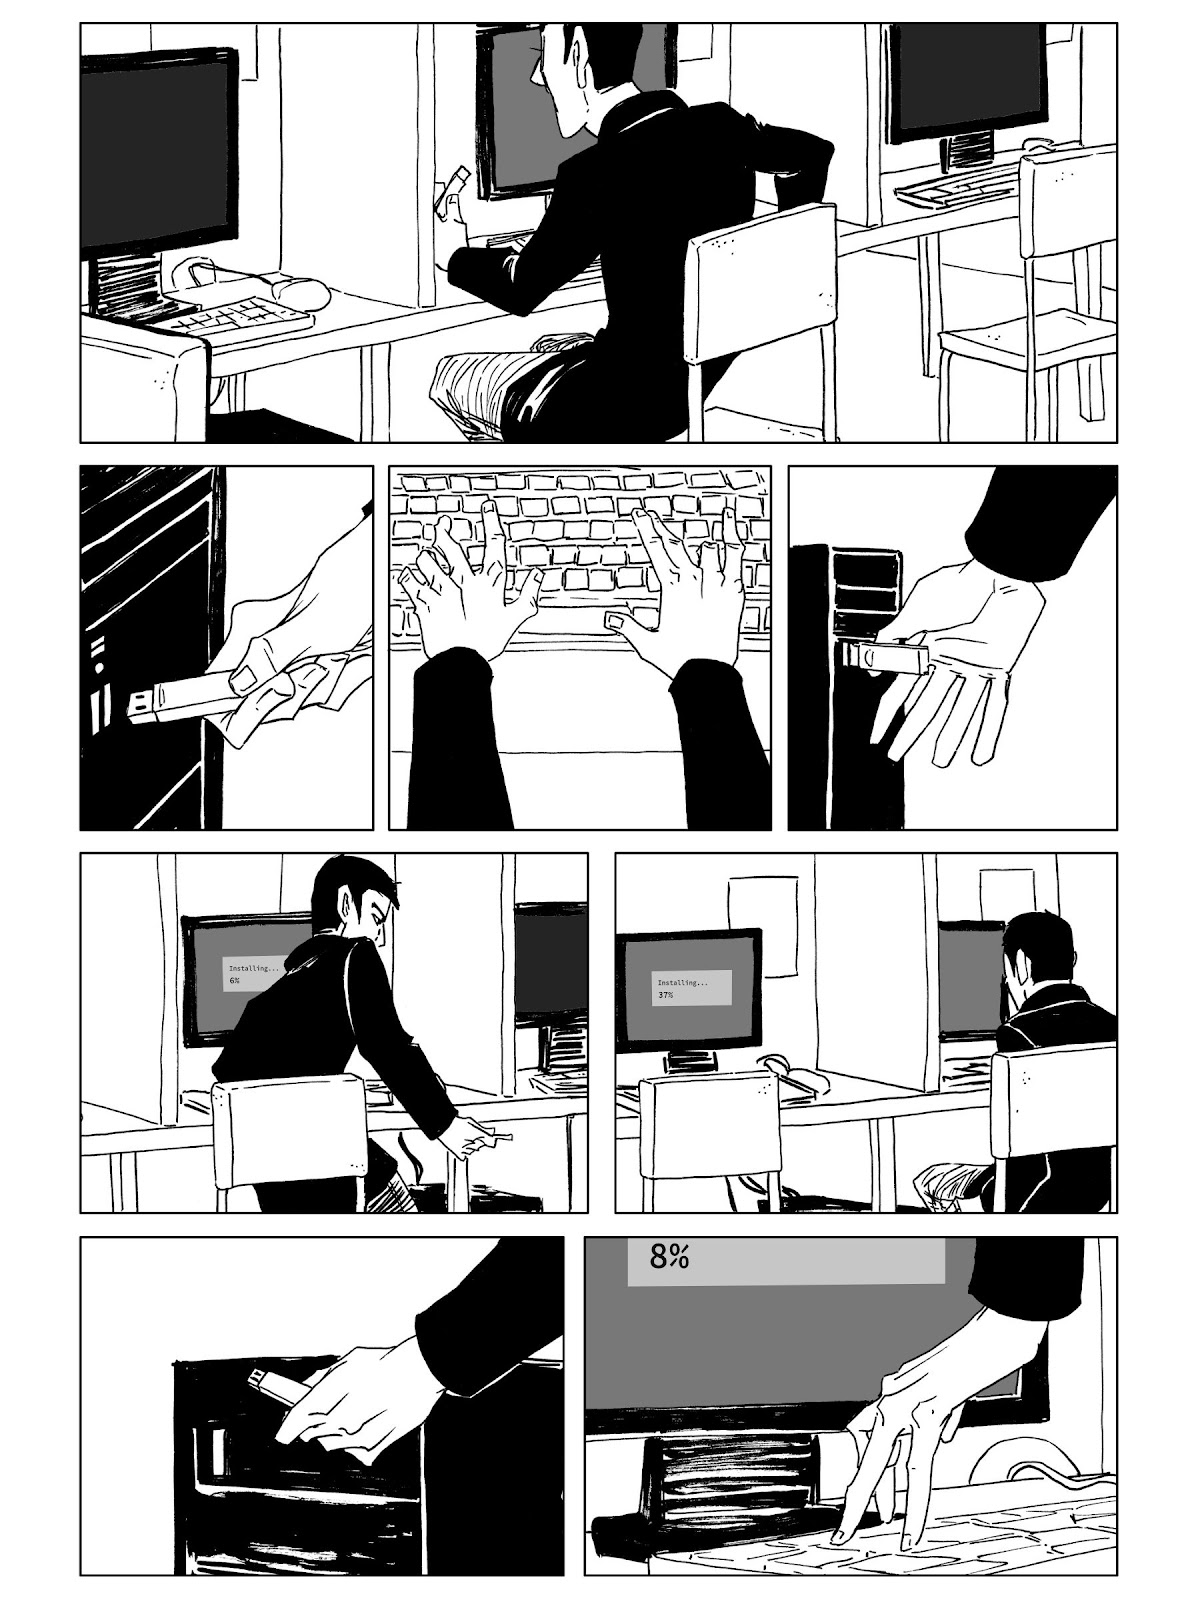 Lifehacks issue 3 - Page 10